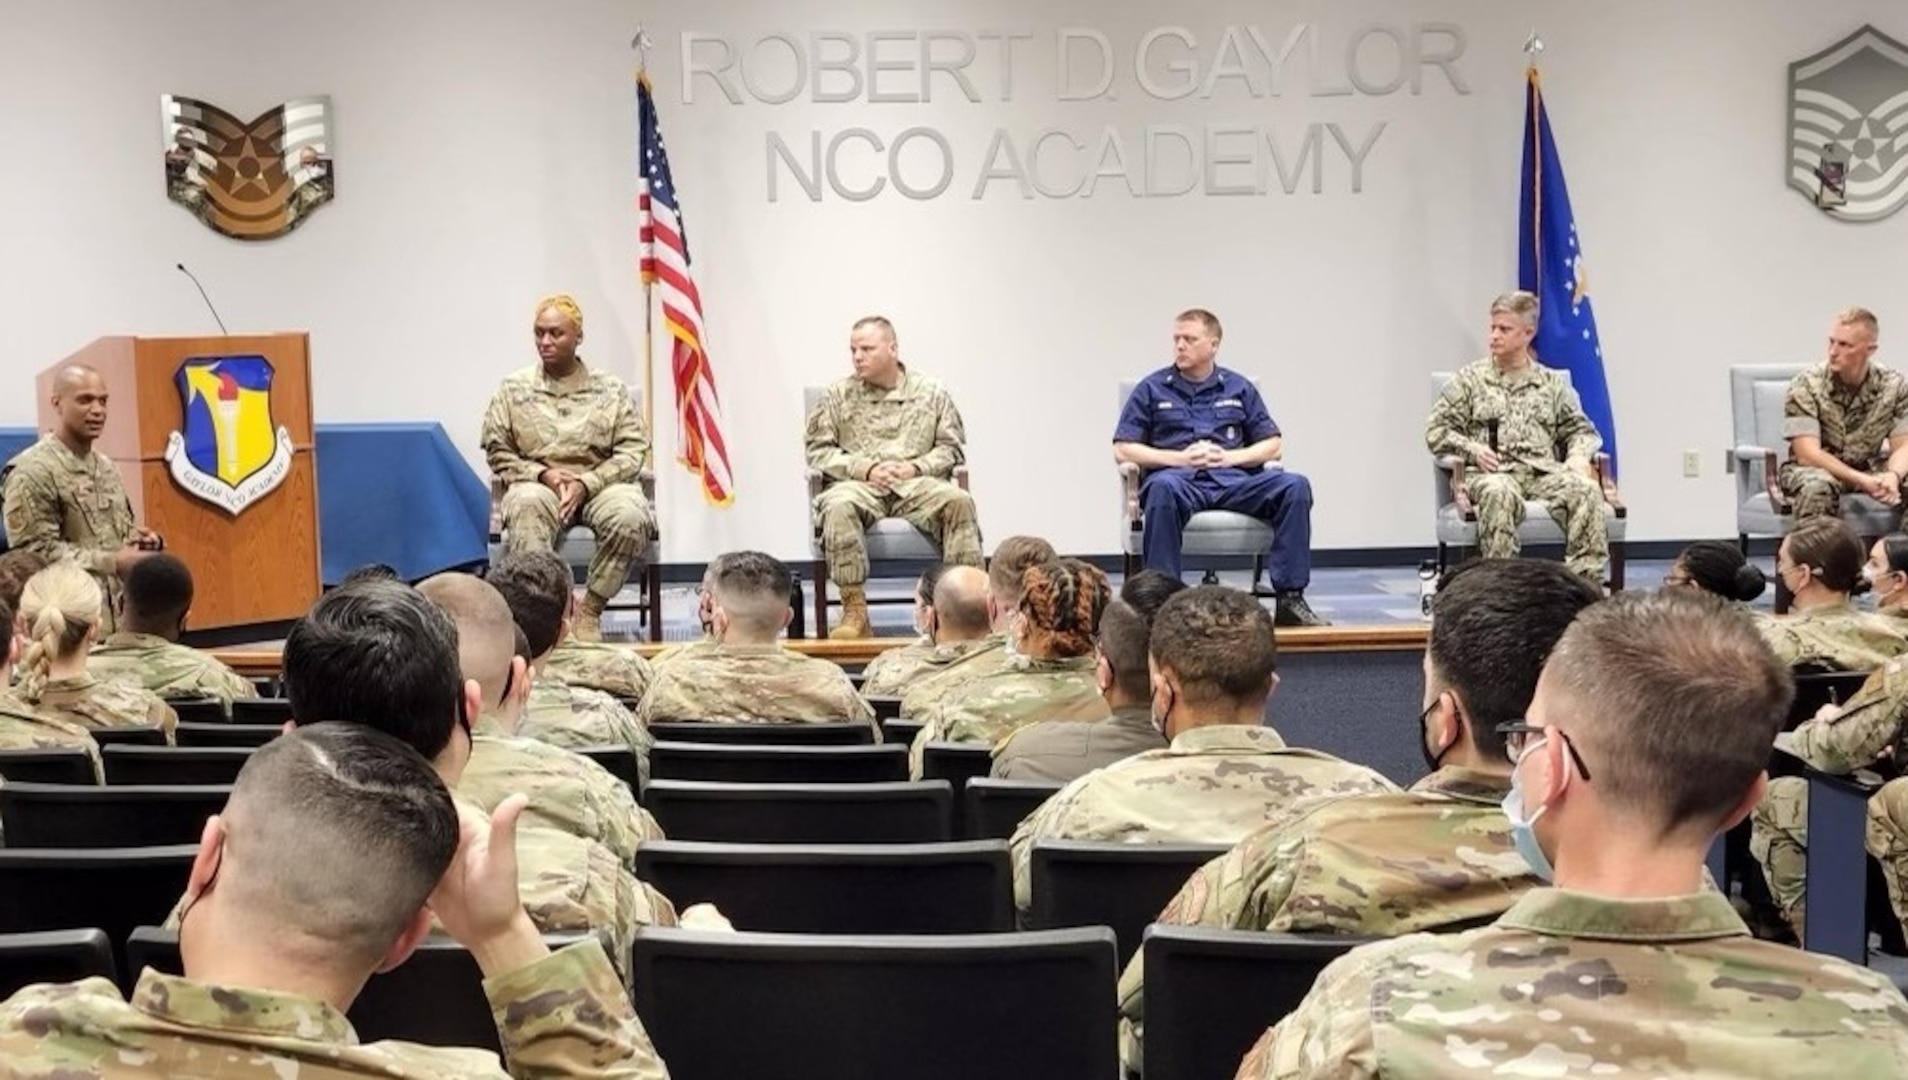 Robert D. Gaylor NCO Academy hosts first senior leader forum